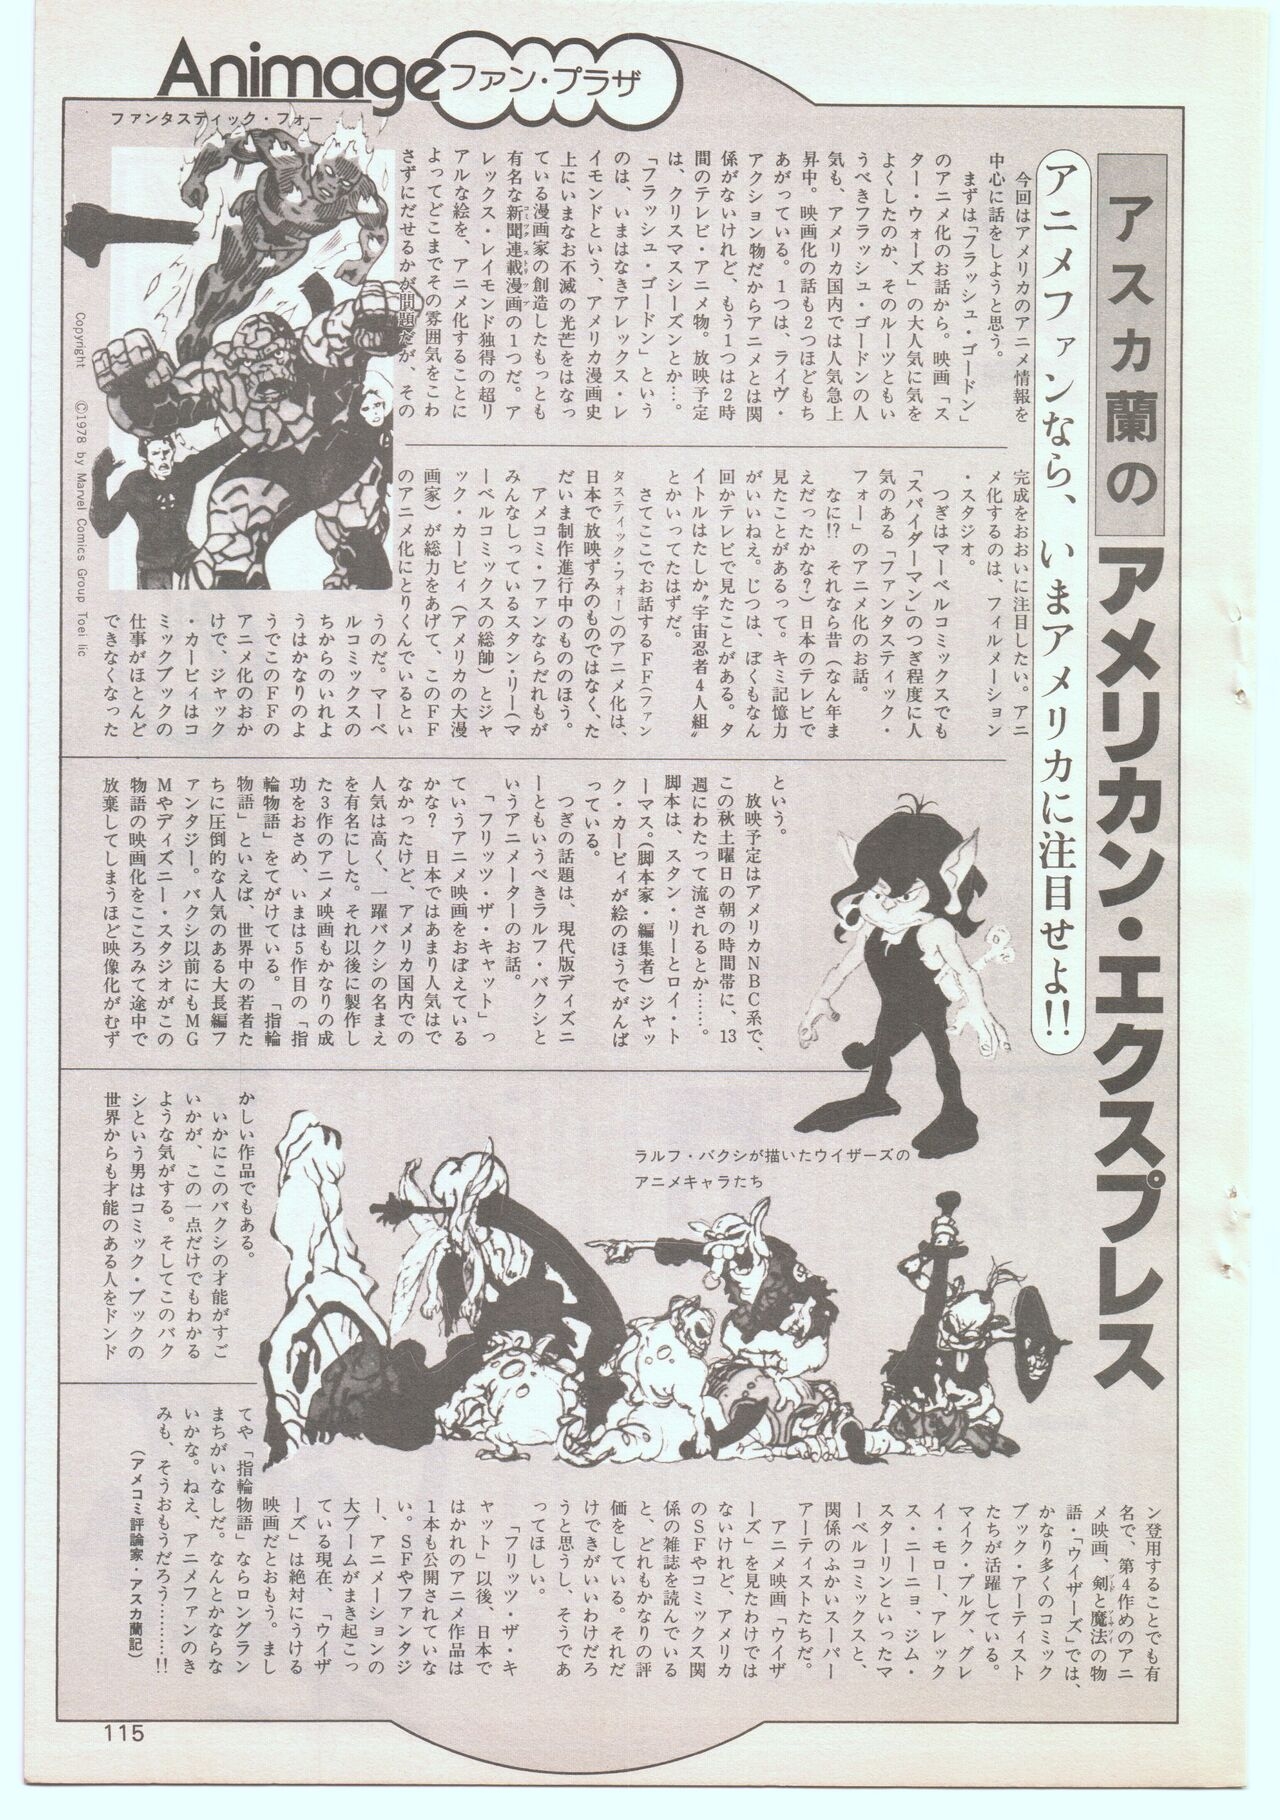 Animage 1978 v002 (2nd Issue) 110